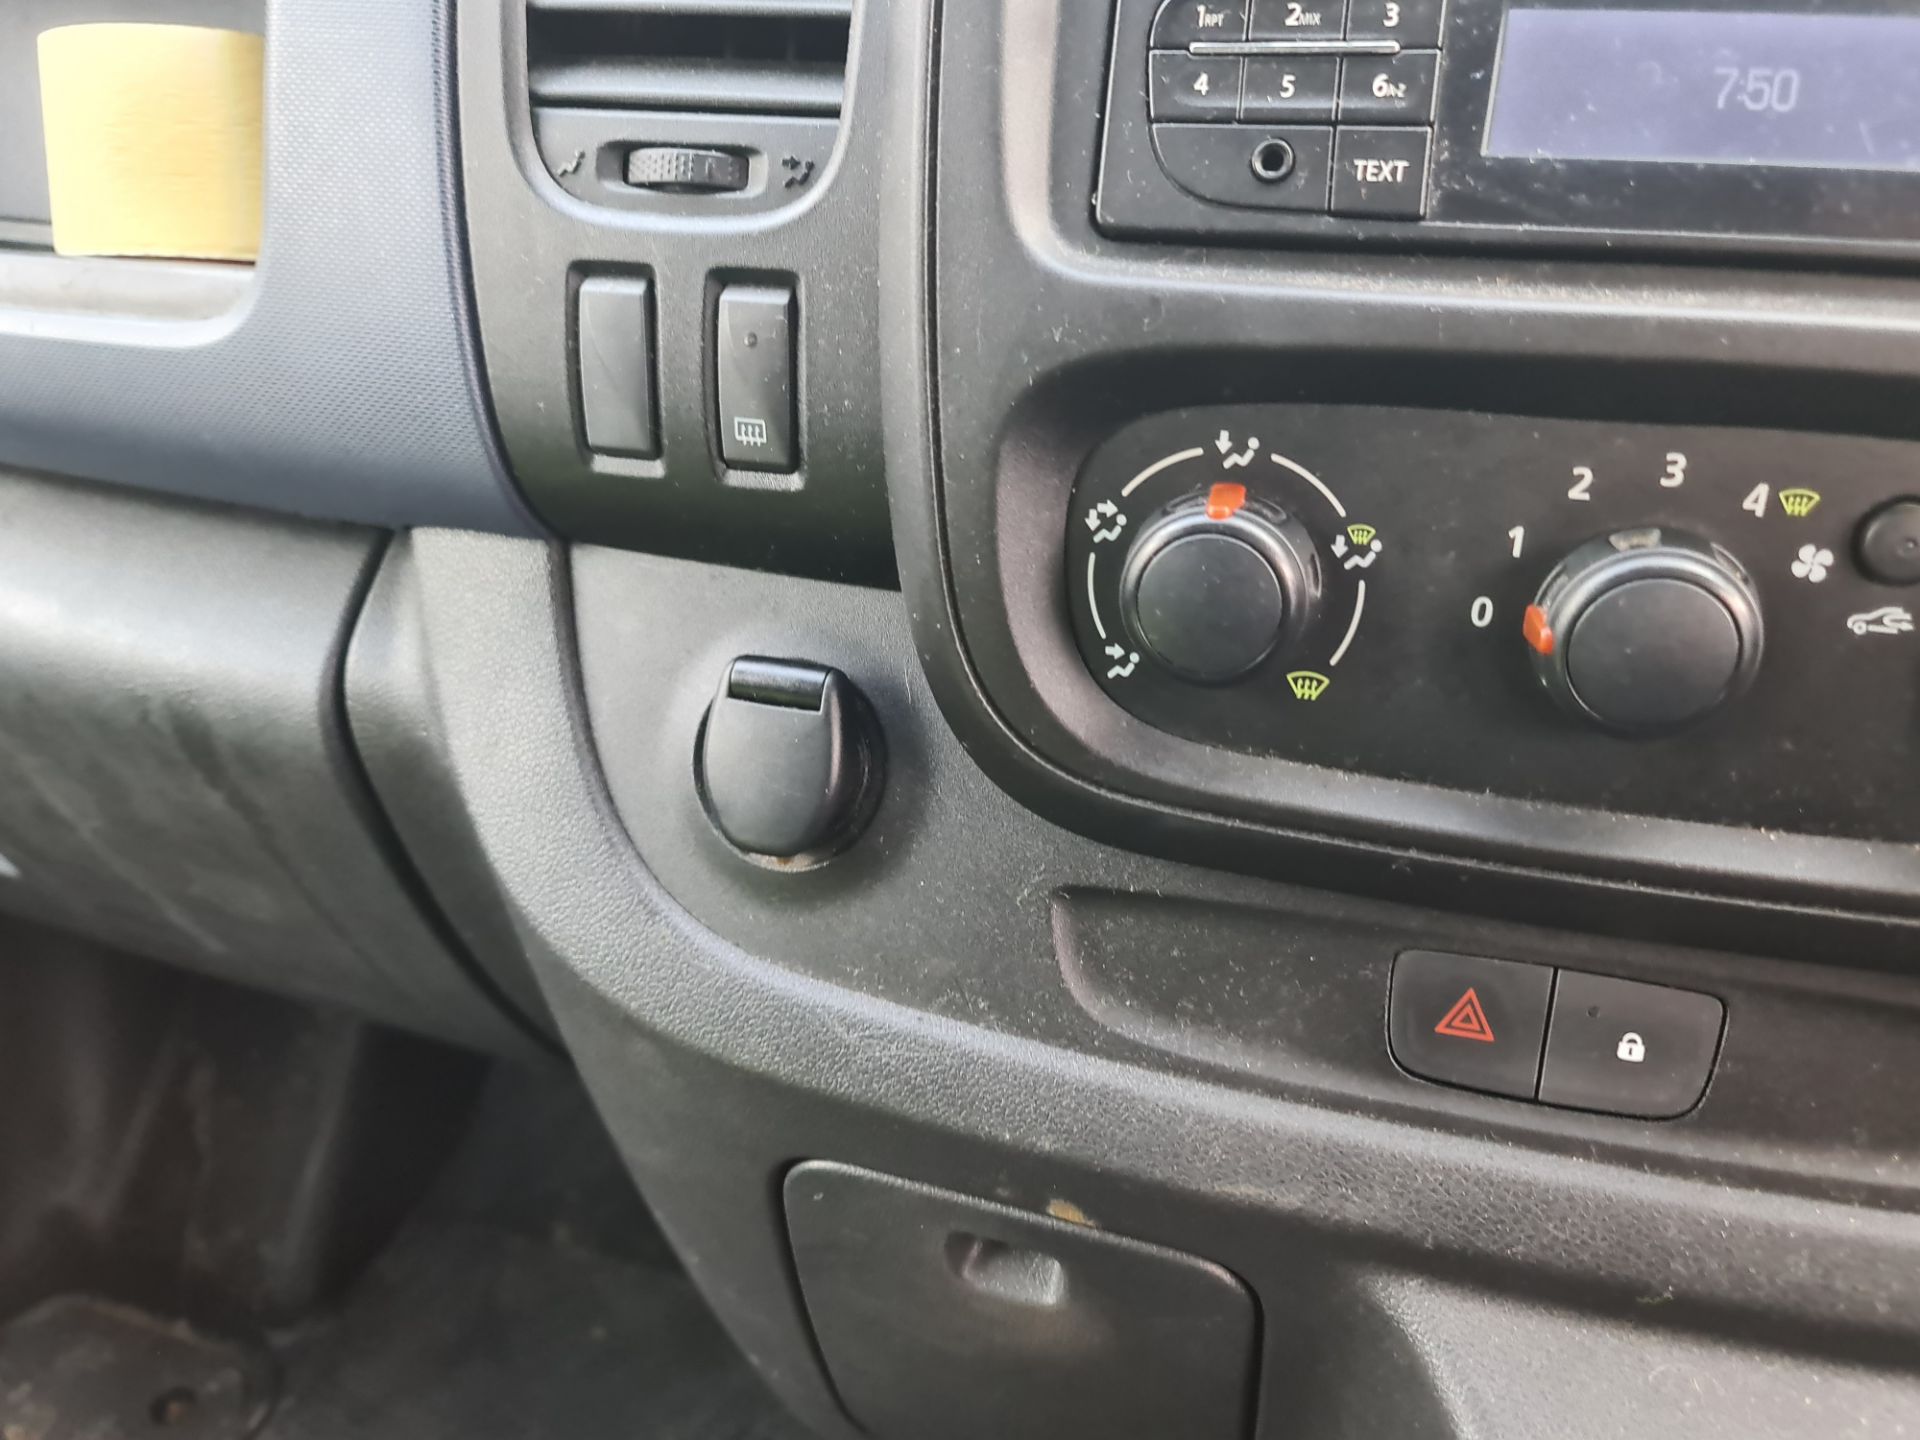 2015 Vauxhall Vivaro 2900 CDTi panel van - Image 80 of 81